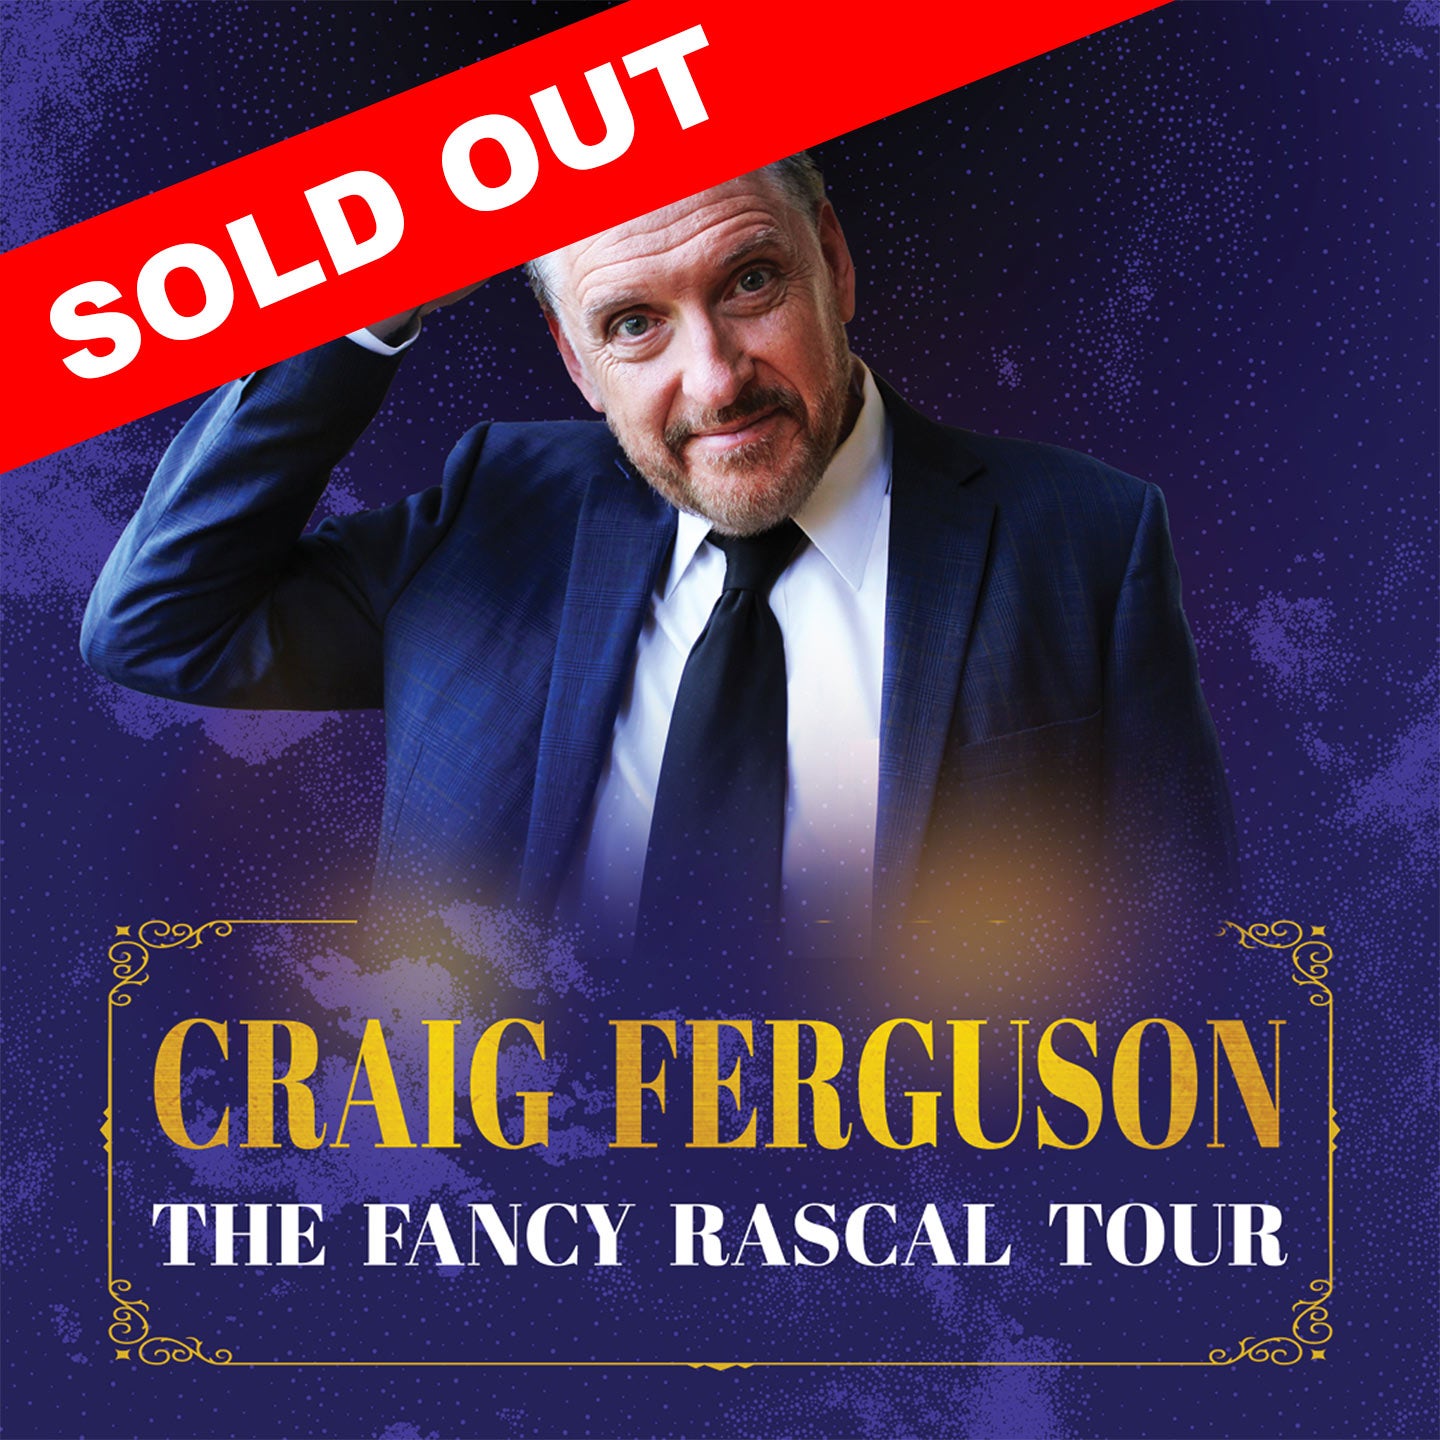 Craig Ferguson: The Fancy Rascal Tour